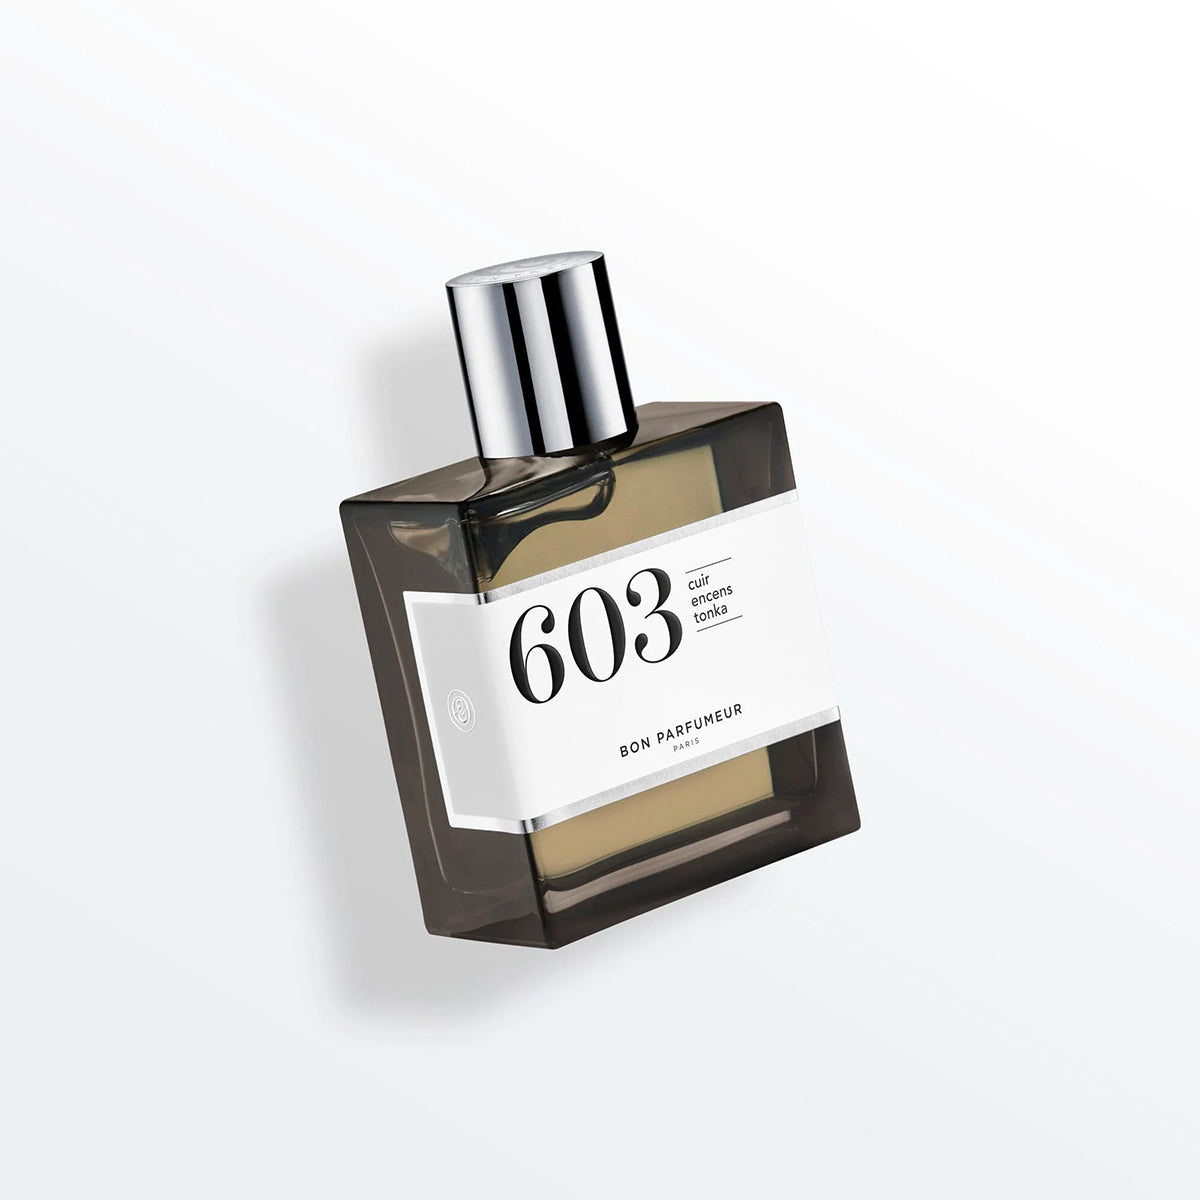 603 by Bon Parfumeur at Indigo Perfumery